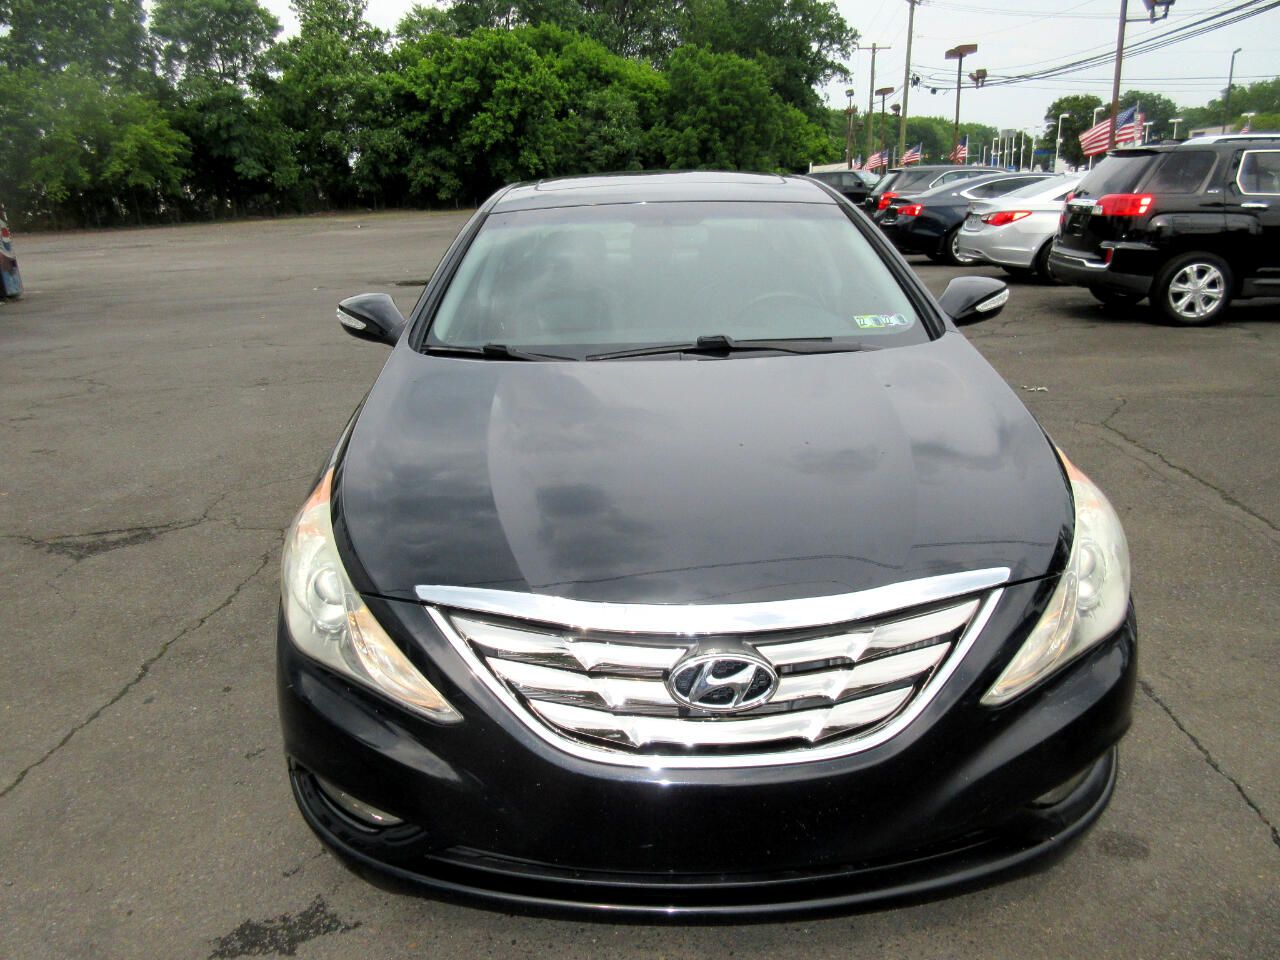 2011 Hyundai Sonata for Sale in Fairless Hills, PA - OfferUp